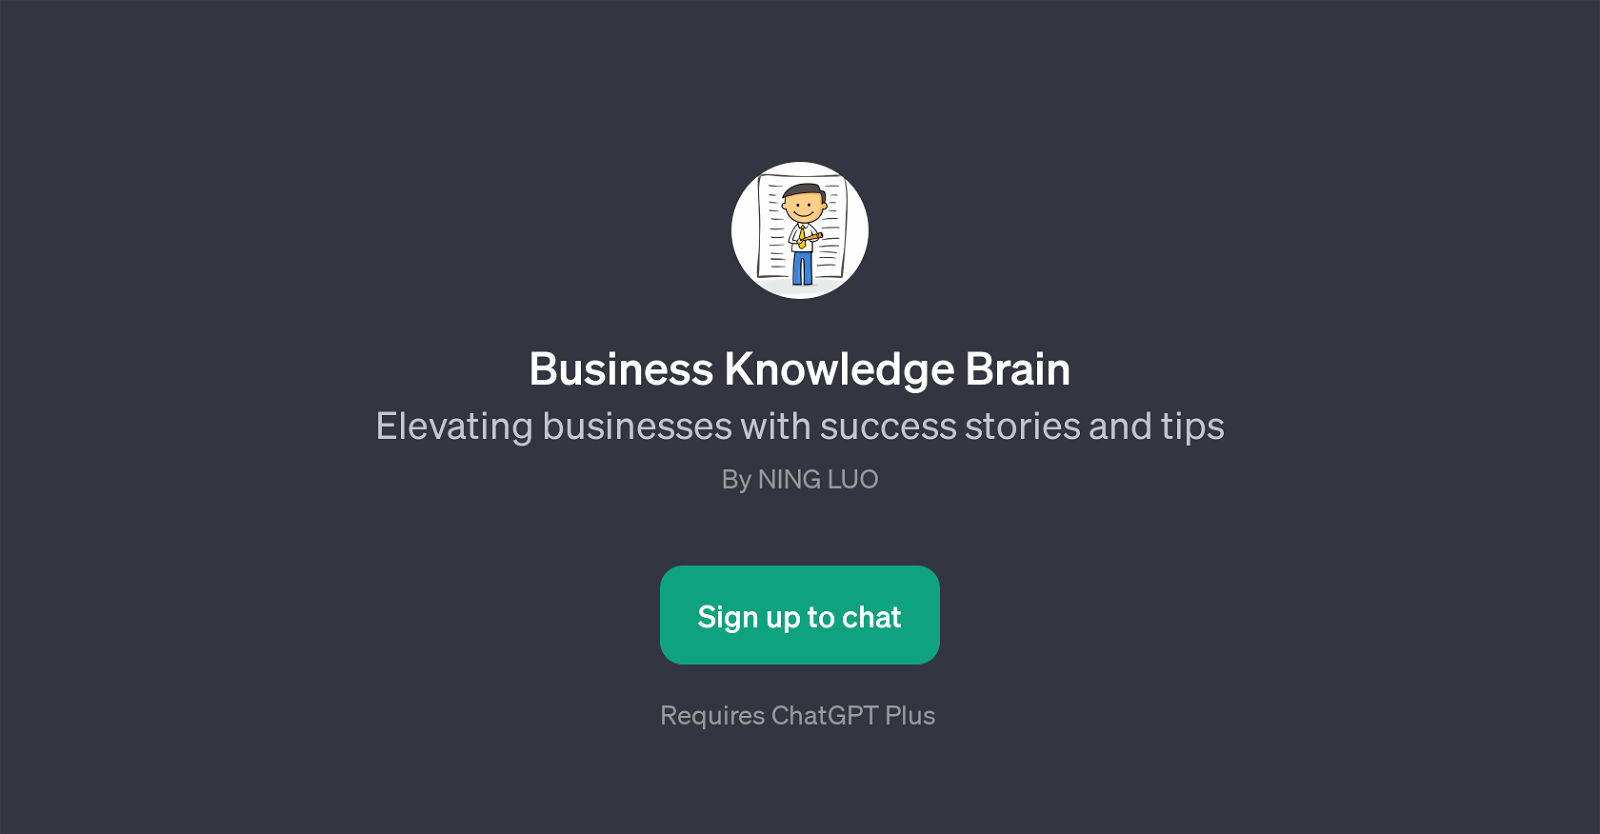 Business Knowledge Brain website